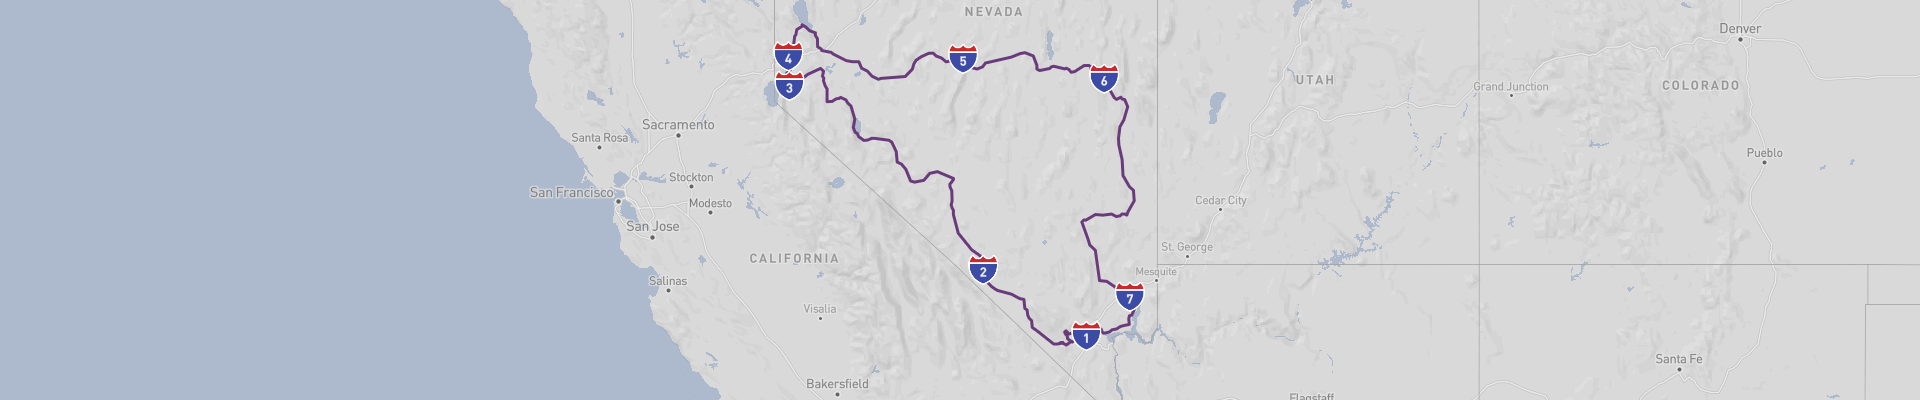 Nevada Itinéraire 